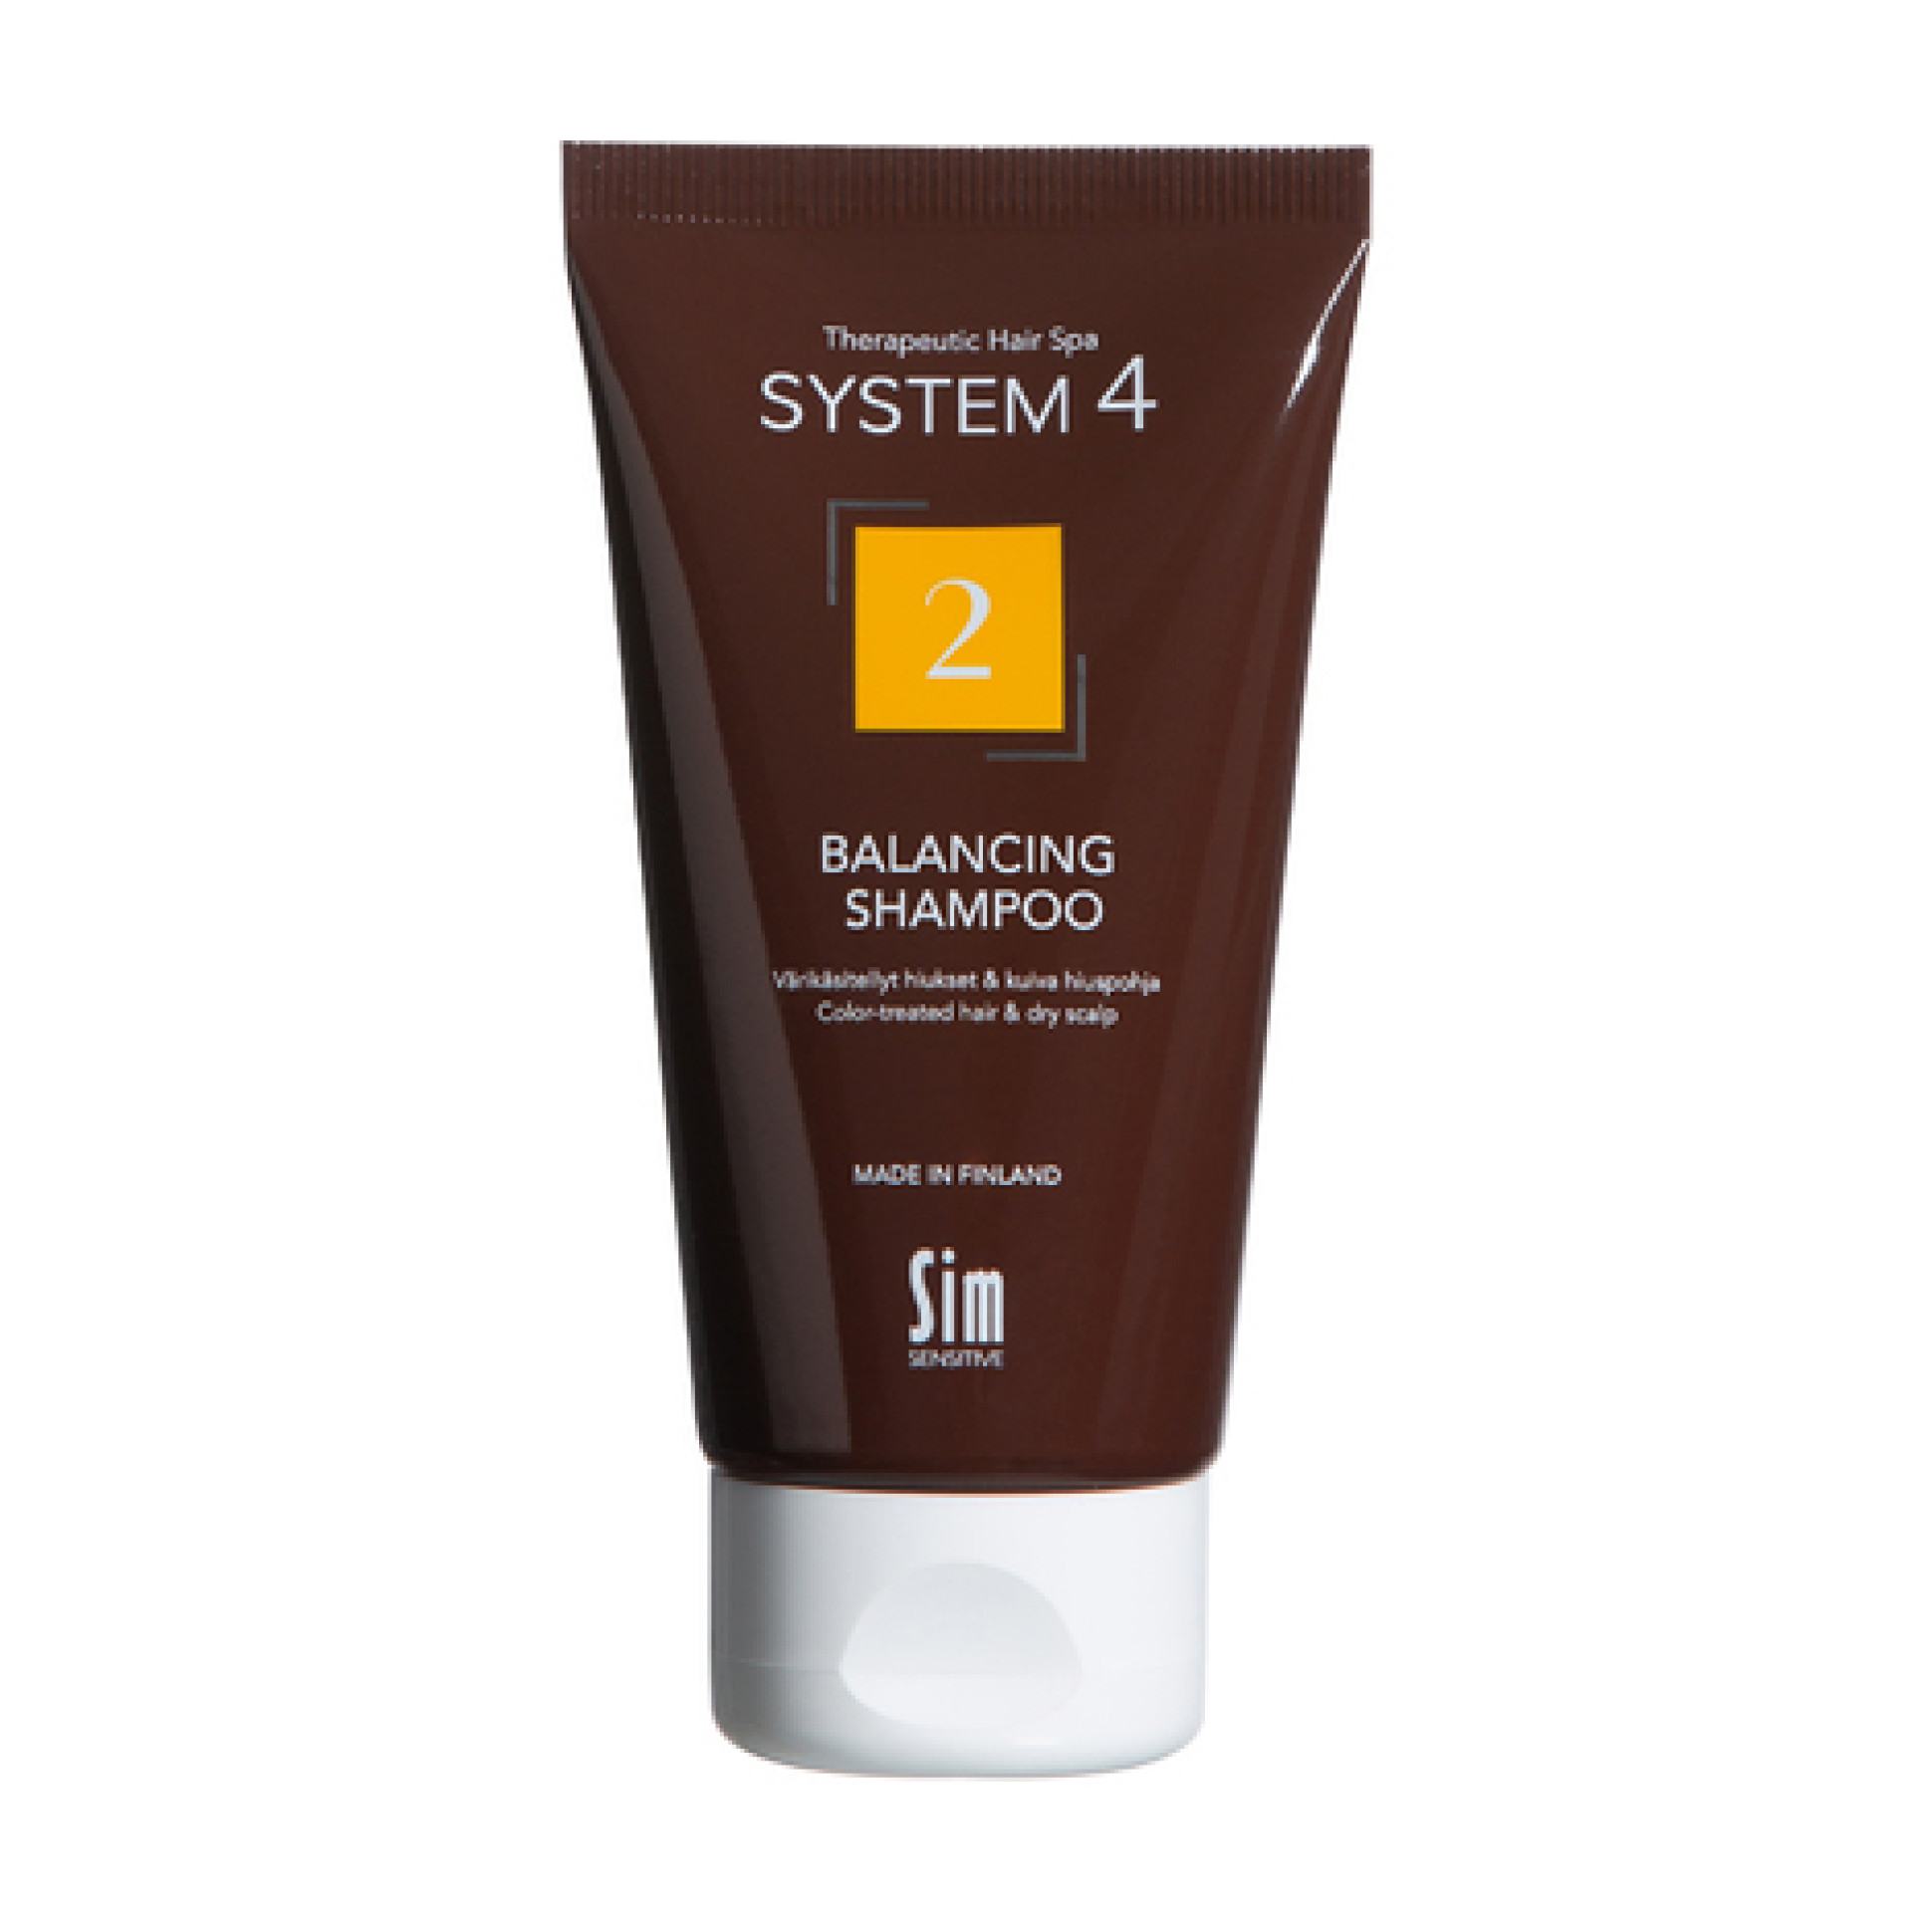 System 4 Climbazole Shampoo 2 Терапевтический шампунь №2